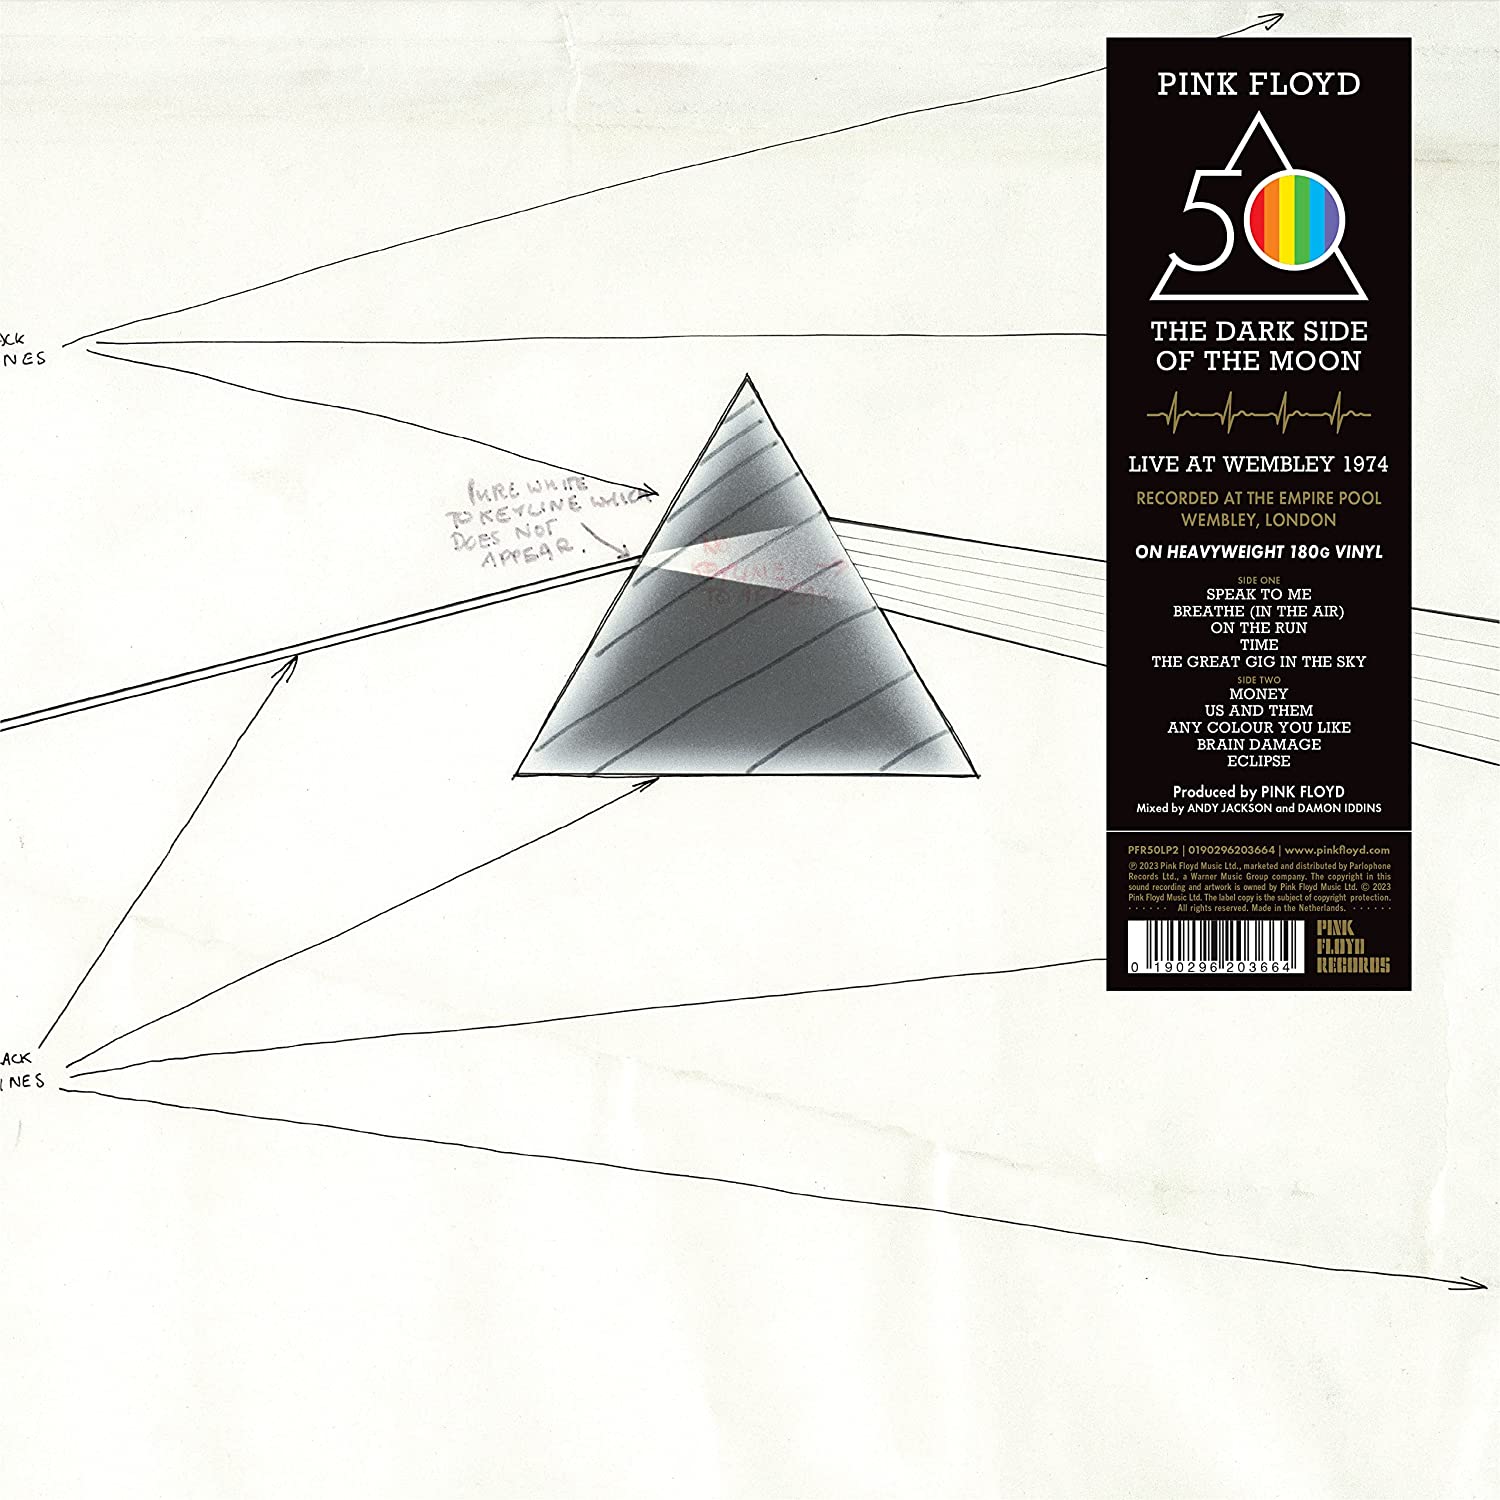 Peter Gabriel - I / O - Dark-Side Mix - Vinyl 2LP - 2023 - EU